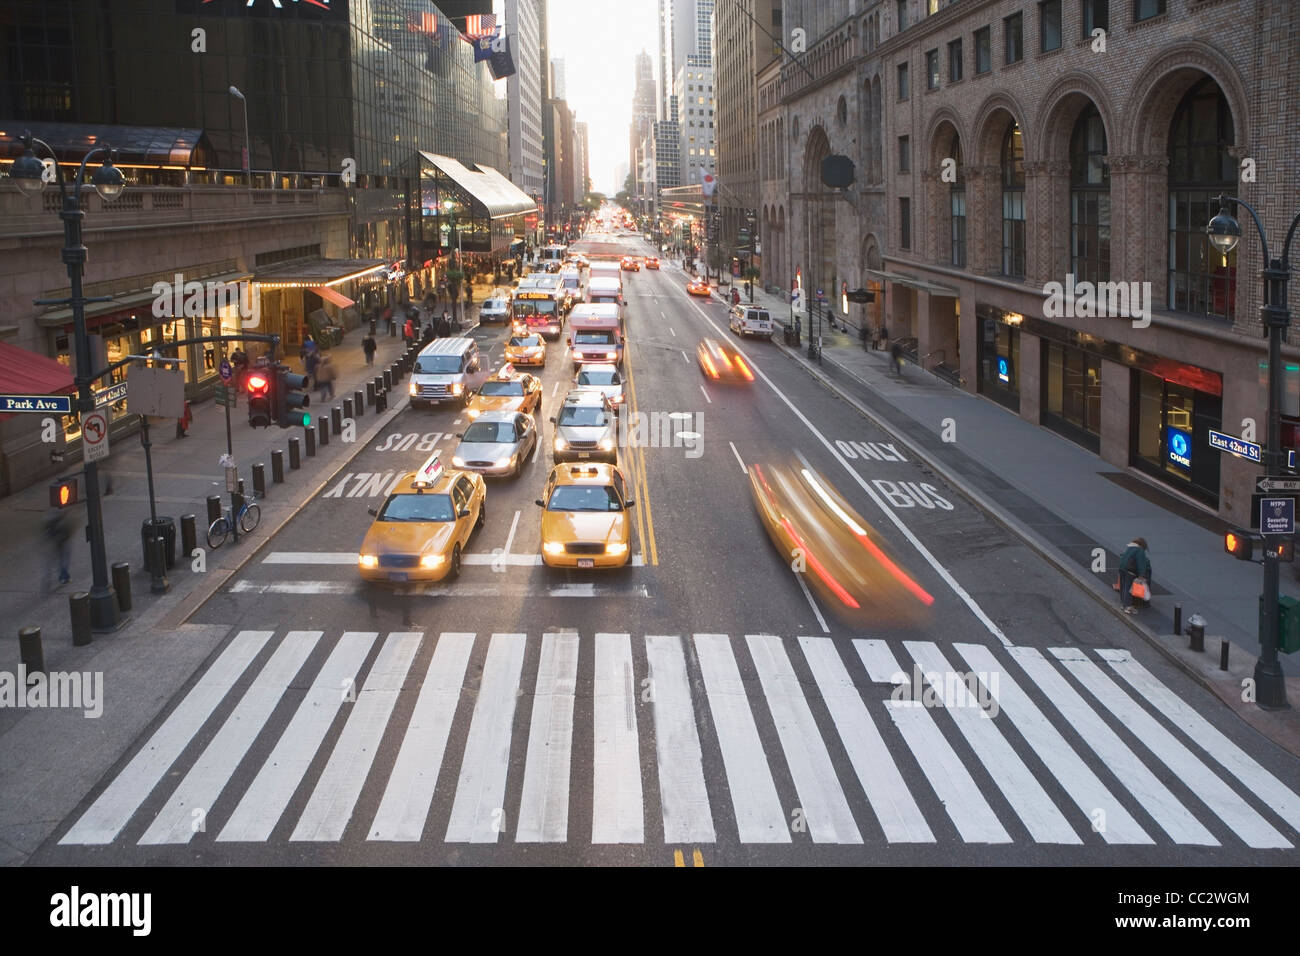 USA, New York City, Manhattan, Traffic stopped at zebra crossing on 42nd street Stock Photo